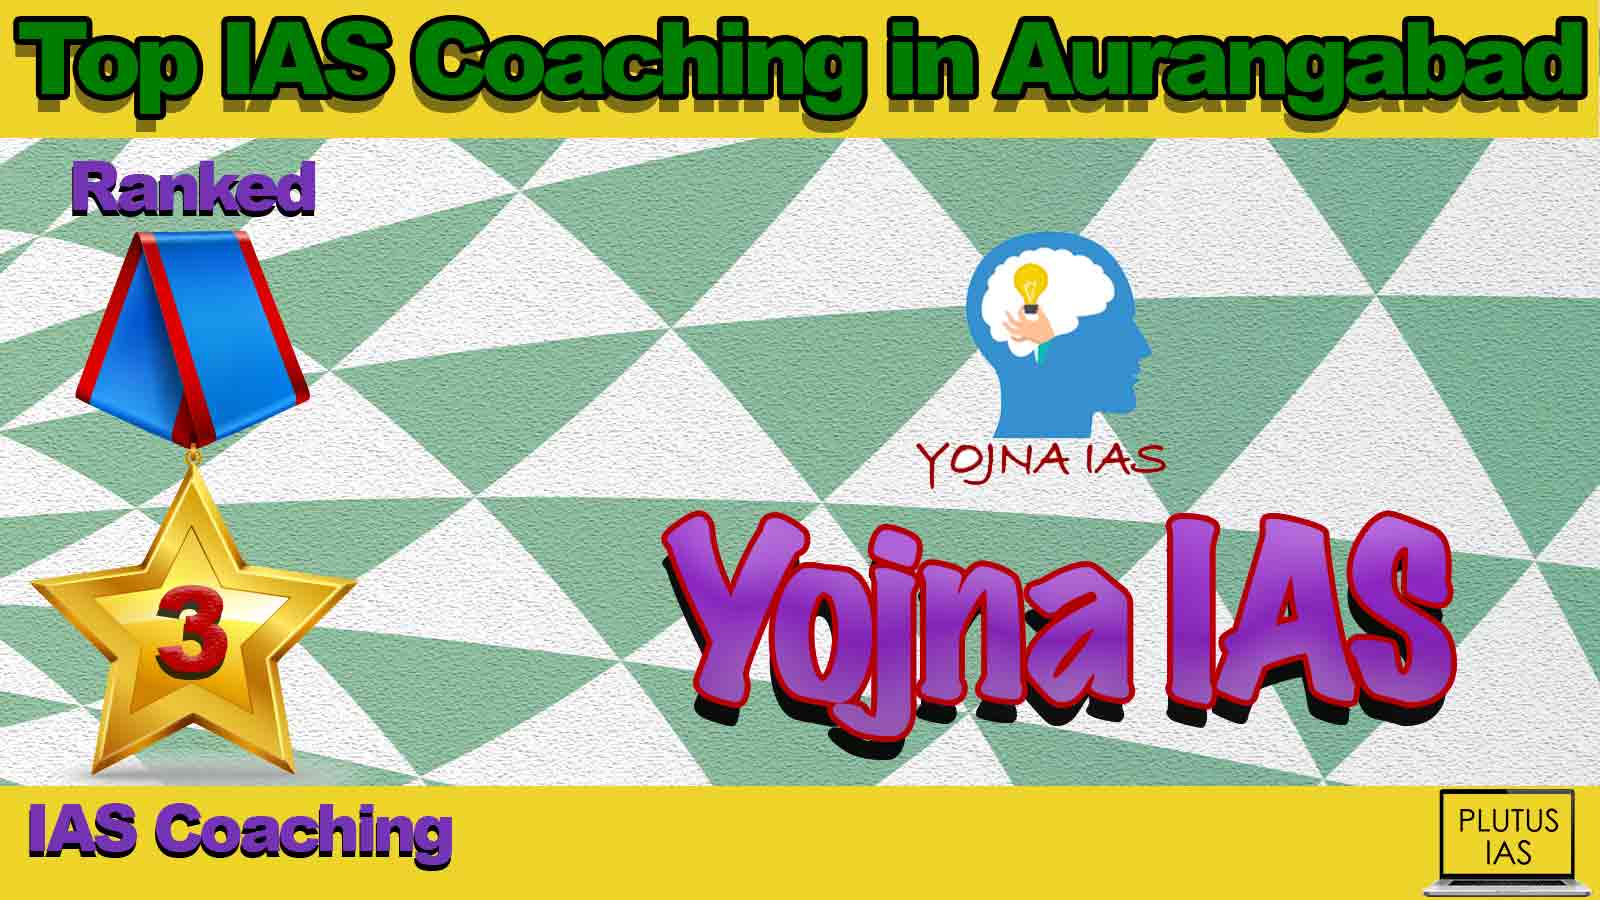 Best IAS Coaching in aurangabad